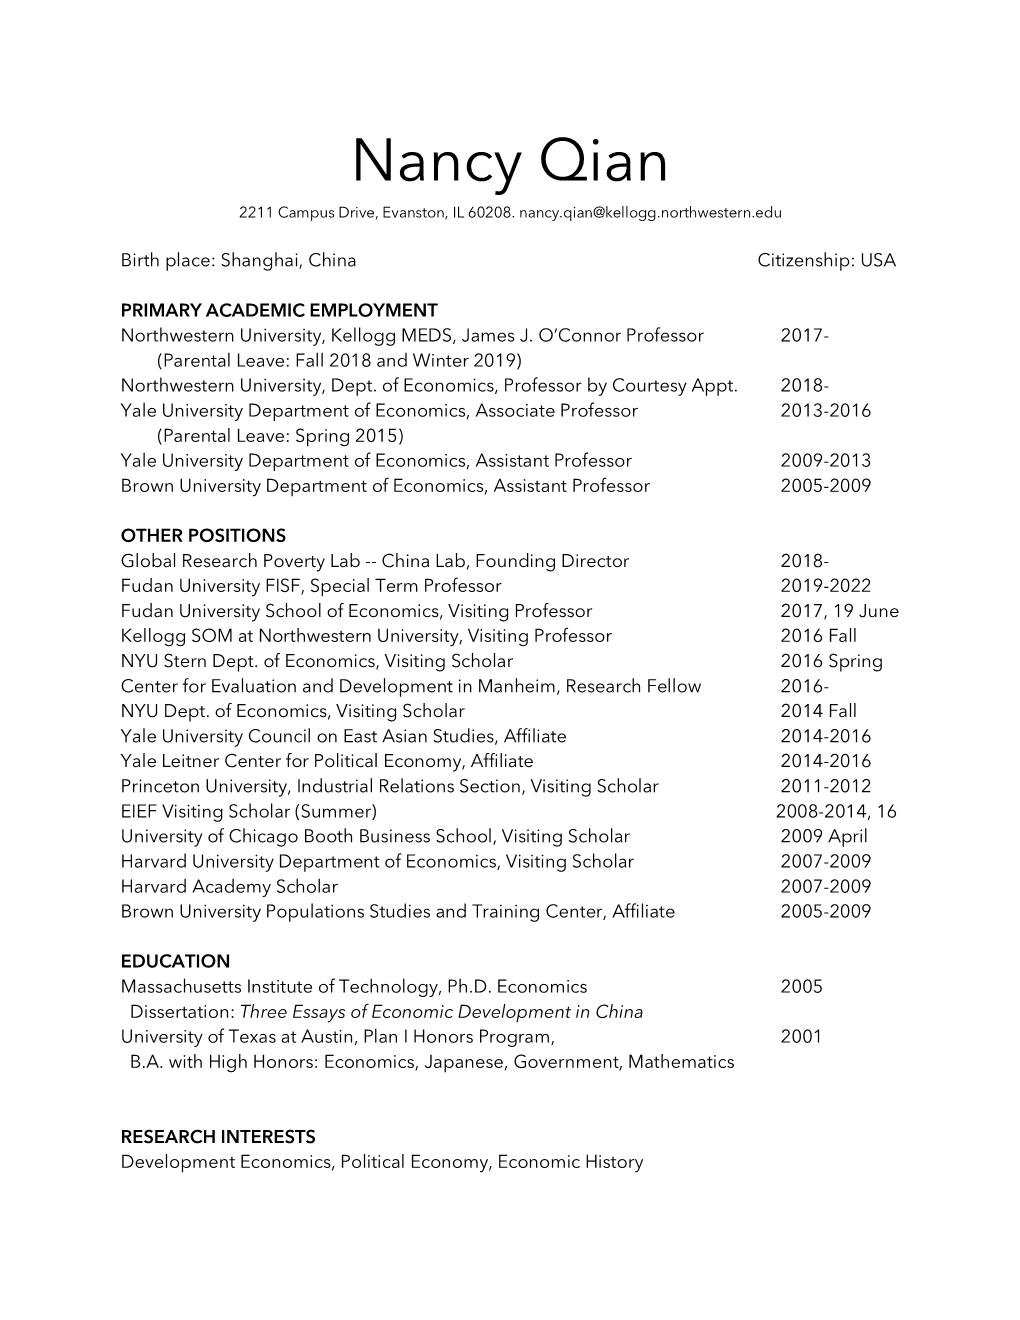 Nancy Qian 2211 Campus Drive, Evanston, IL 60208